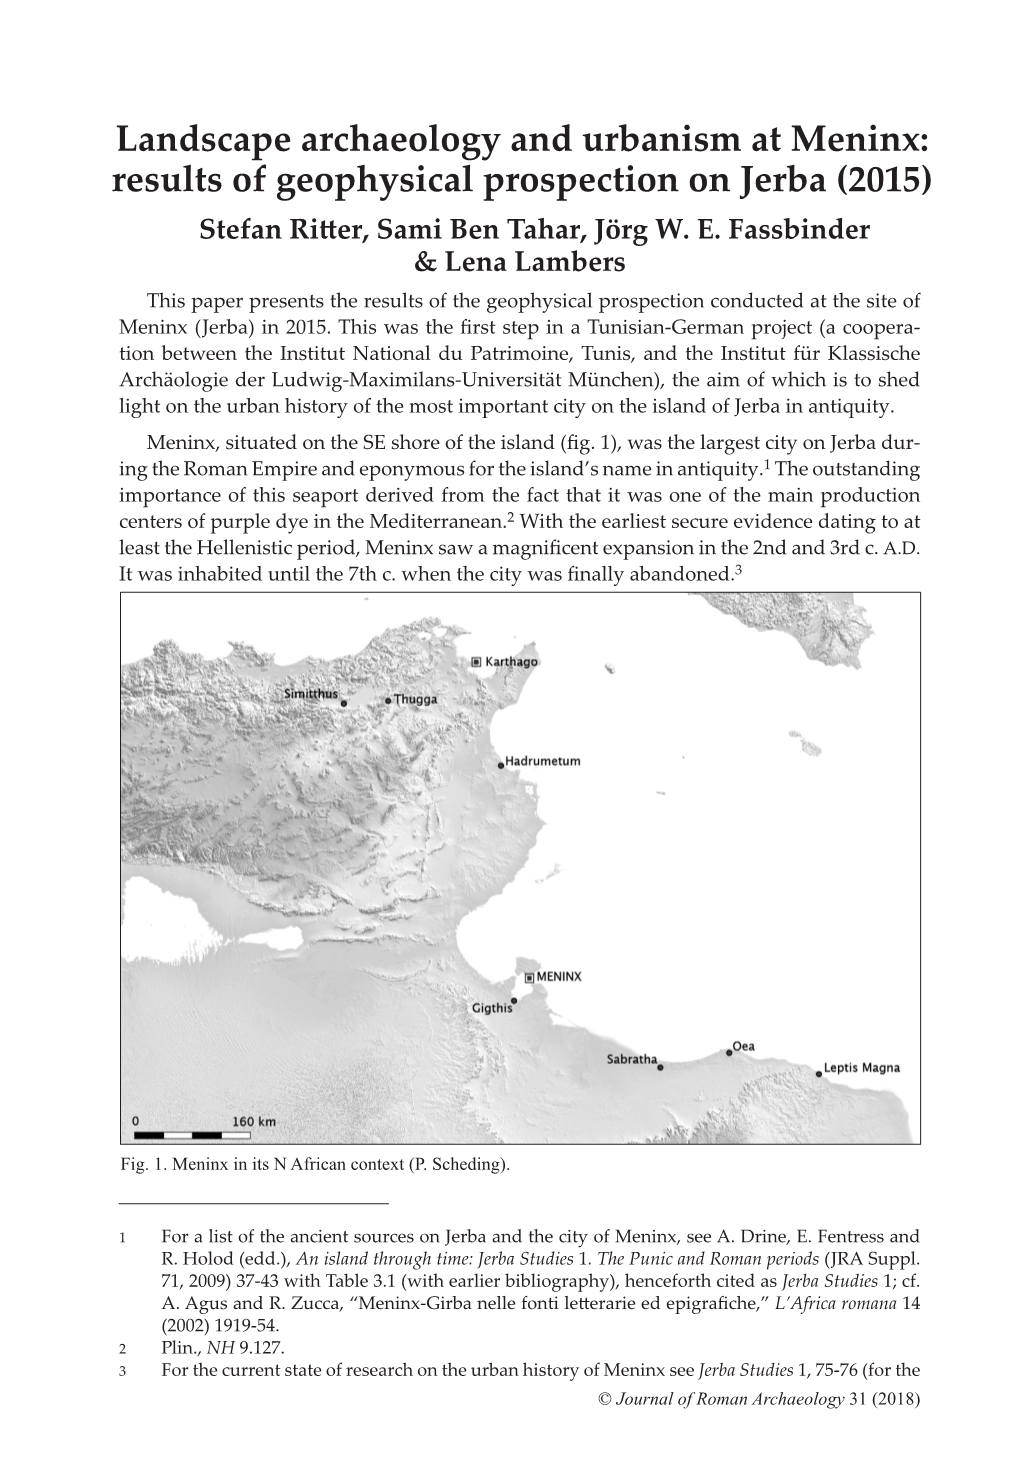 Landscape Archaeology and Urbanism at Meninx: Results of Geophysical Prospection on Jerba (2015) Stefan Ritter, Sami Ben Tahar, Jörg W